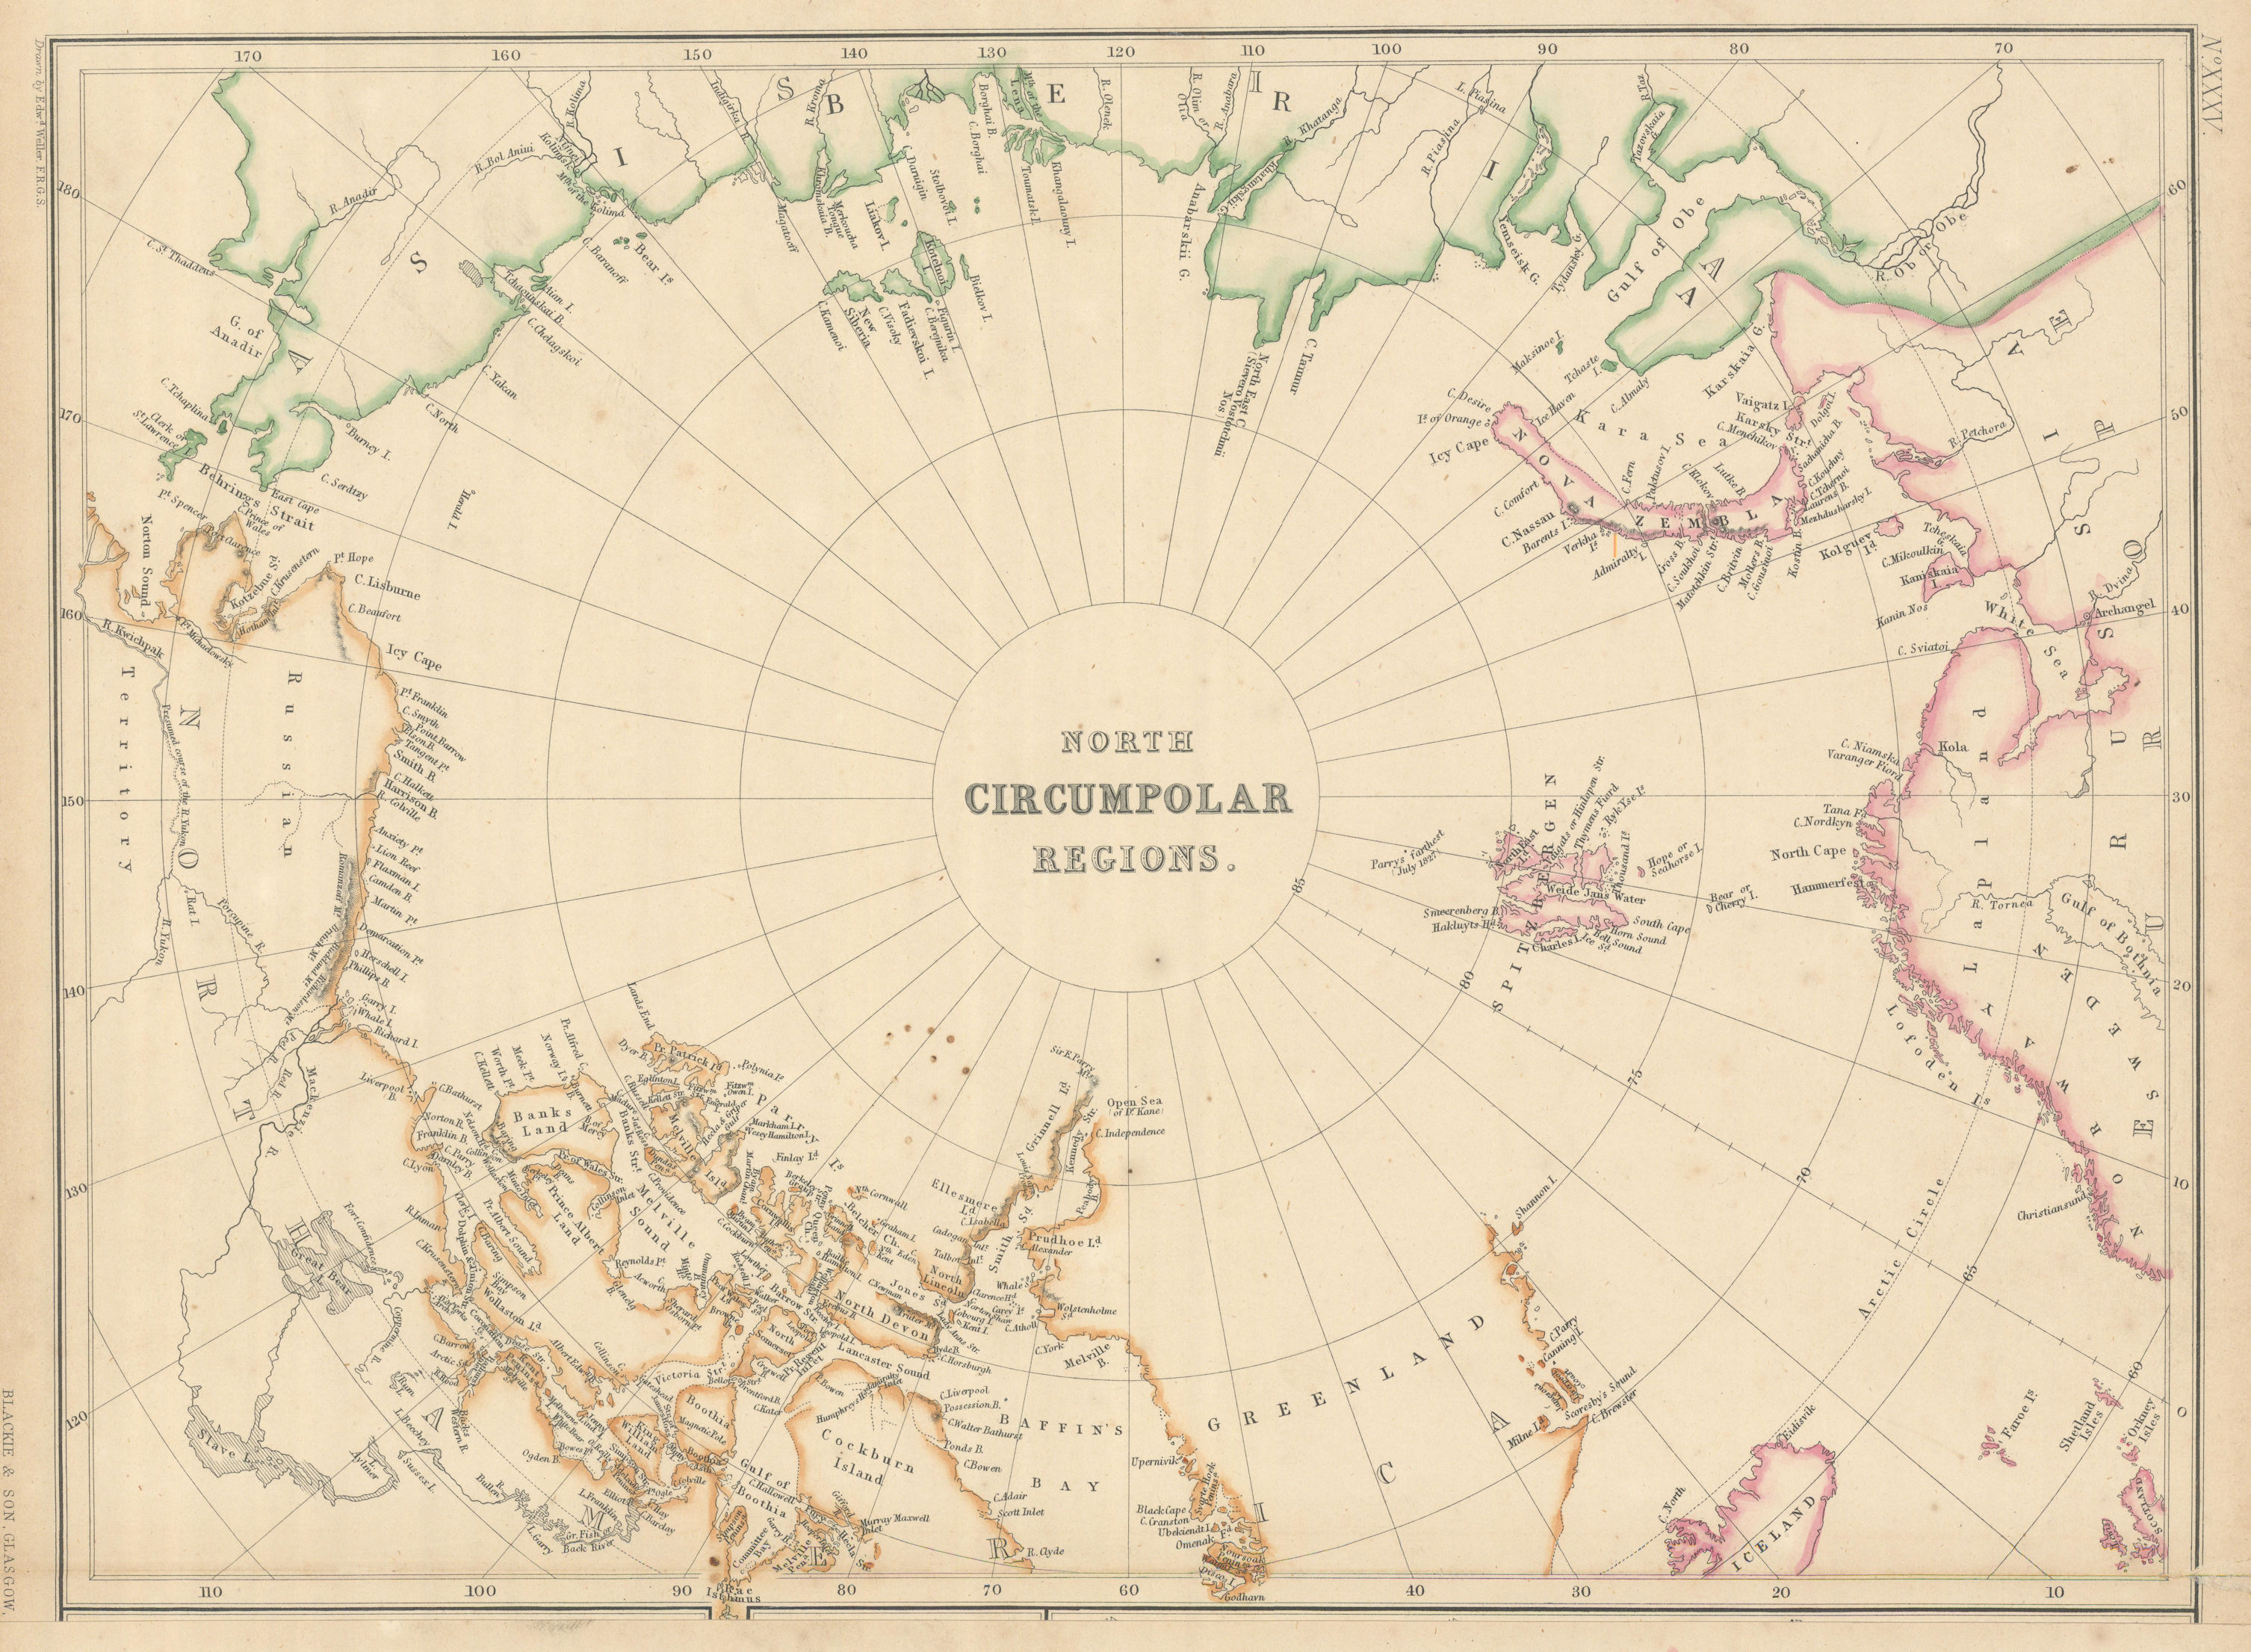 Associate Product North Circumpolar Regions. North Pole Arctic by Edward Weller 1860 old map